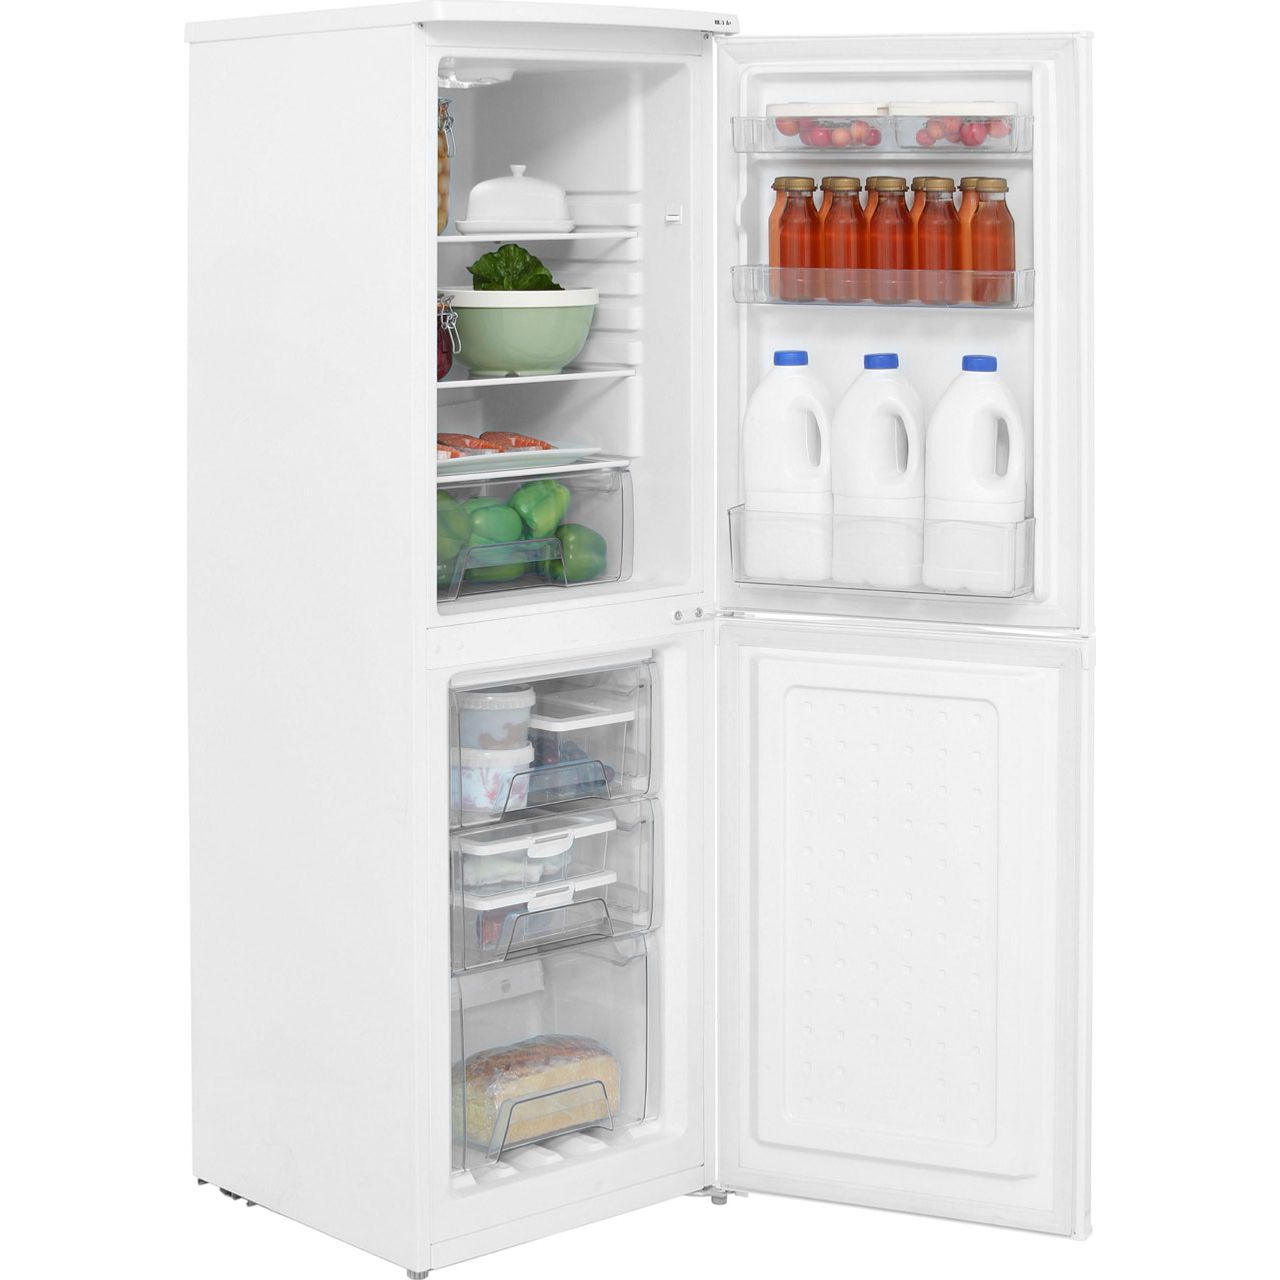 32++ Lec tf50152w freestanding fridge freezer ideas in 2021 